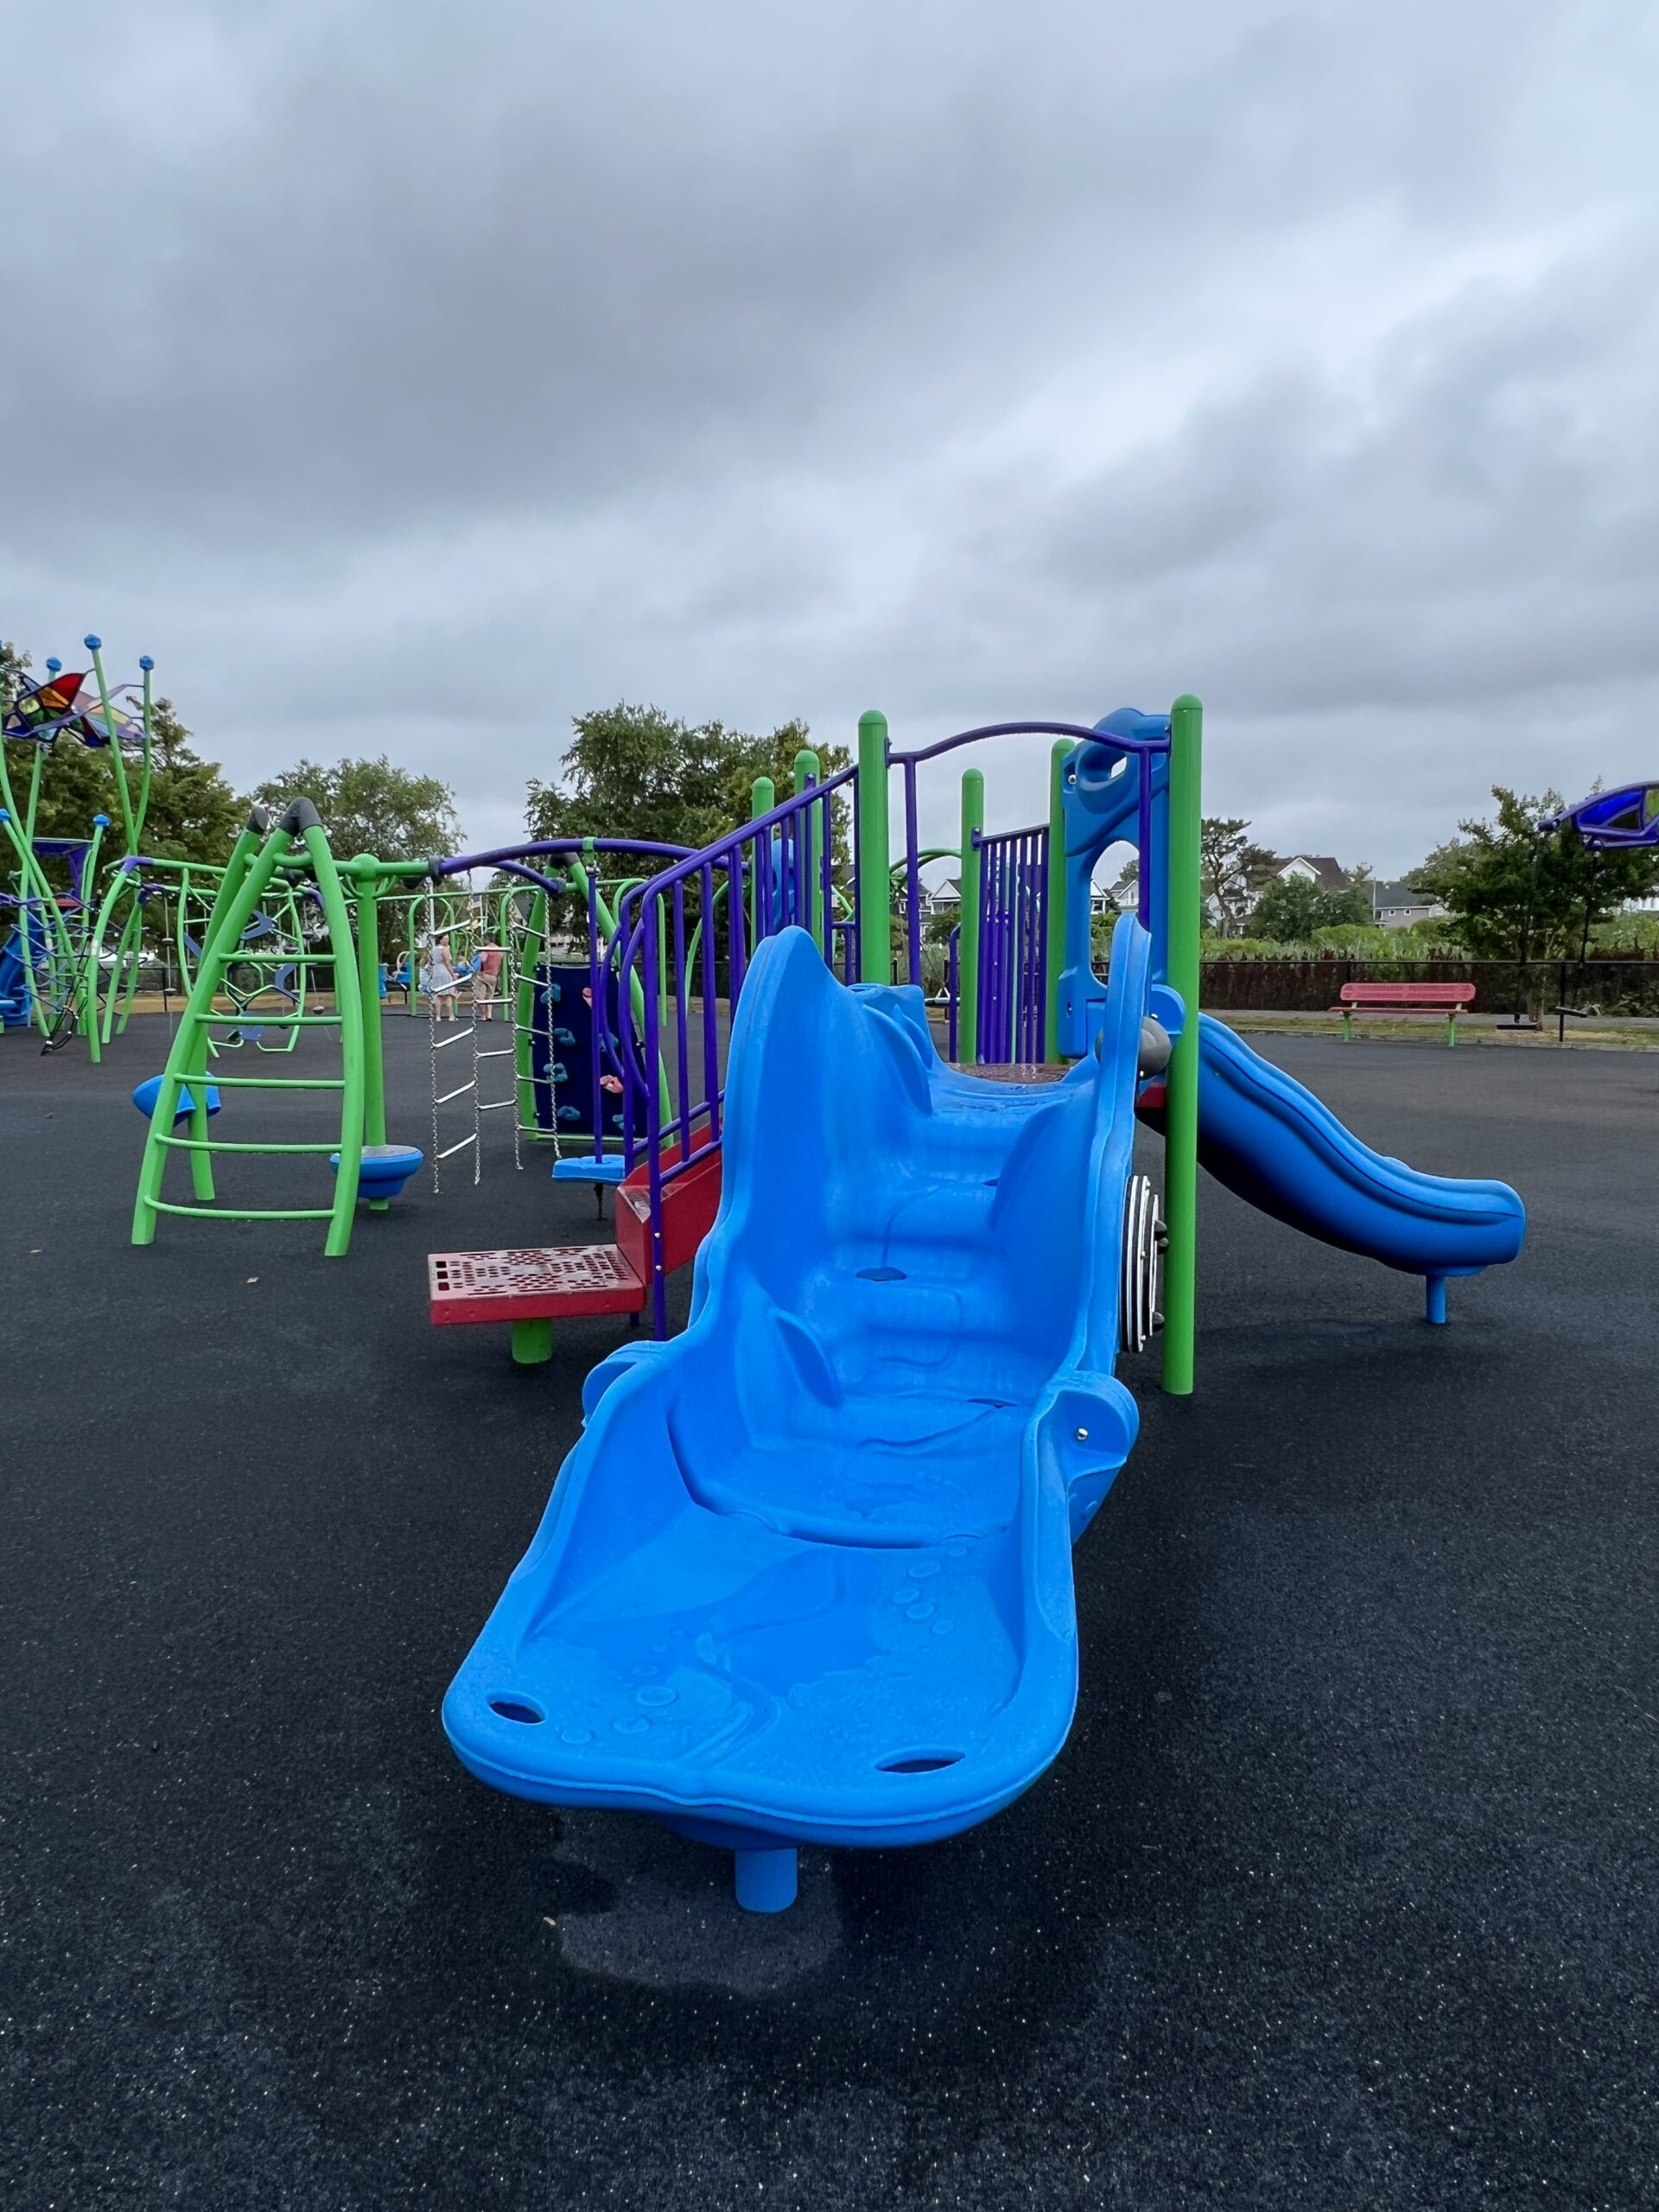 SLIDES - bumpy slide on preschool playground TALL image at Jane Magovern's Playground in Belmar NJ